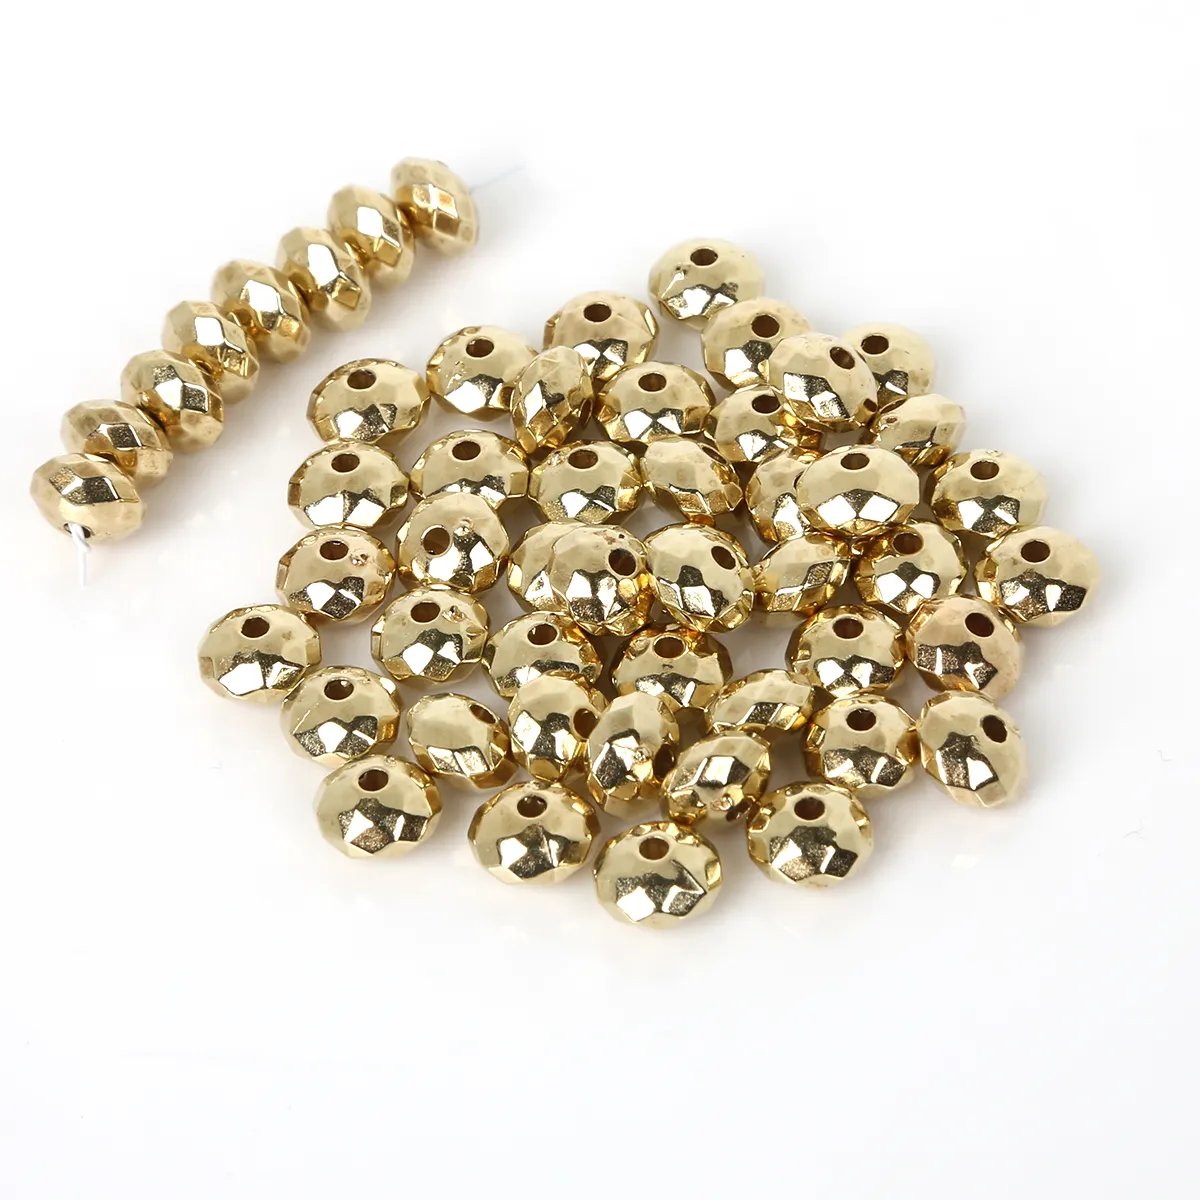 China, venta al por mayor, Bling Chunky Loose Beads 8mm plástico CCB Cross sección rueda Bead para hallazgos de joyería que hace manualidades, yiwu